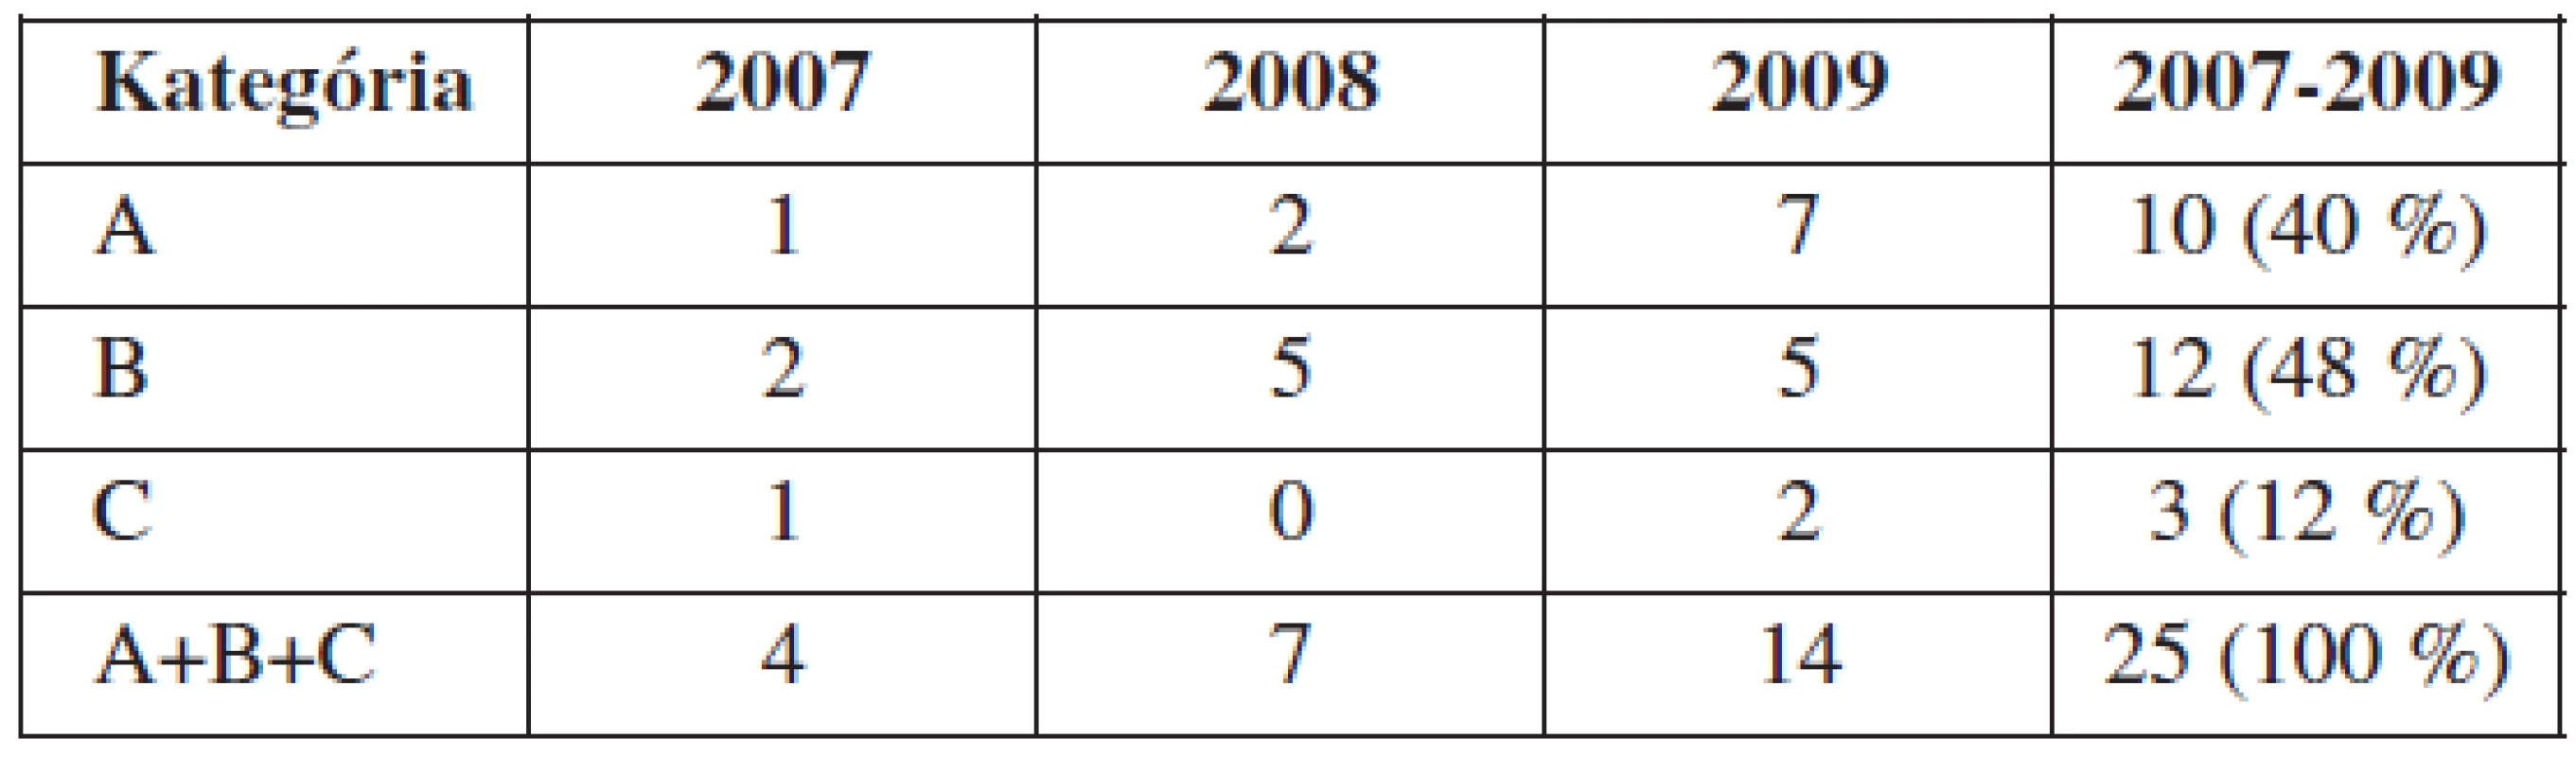 Počet materských úmrtí podľa jednotlivých kategórií v SR v rokoch 2007–2009